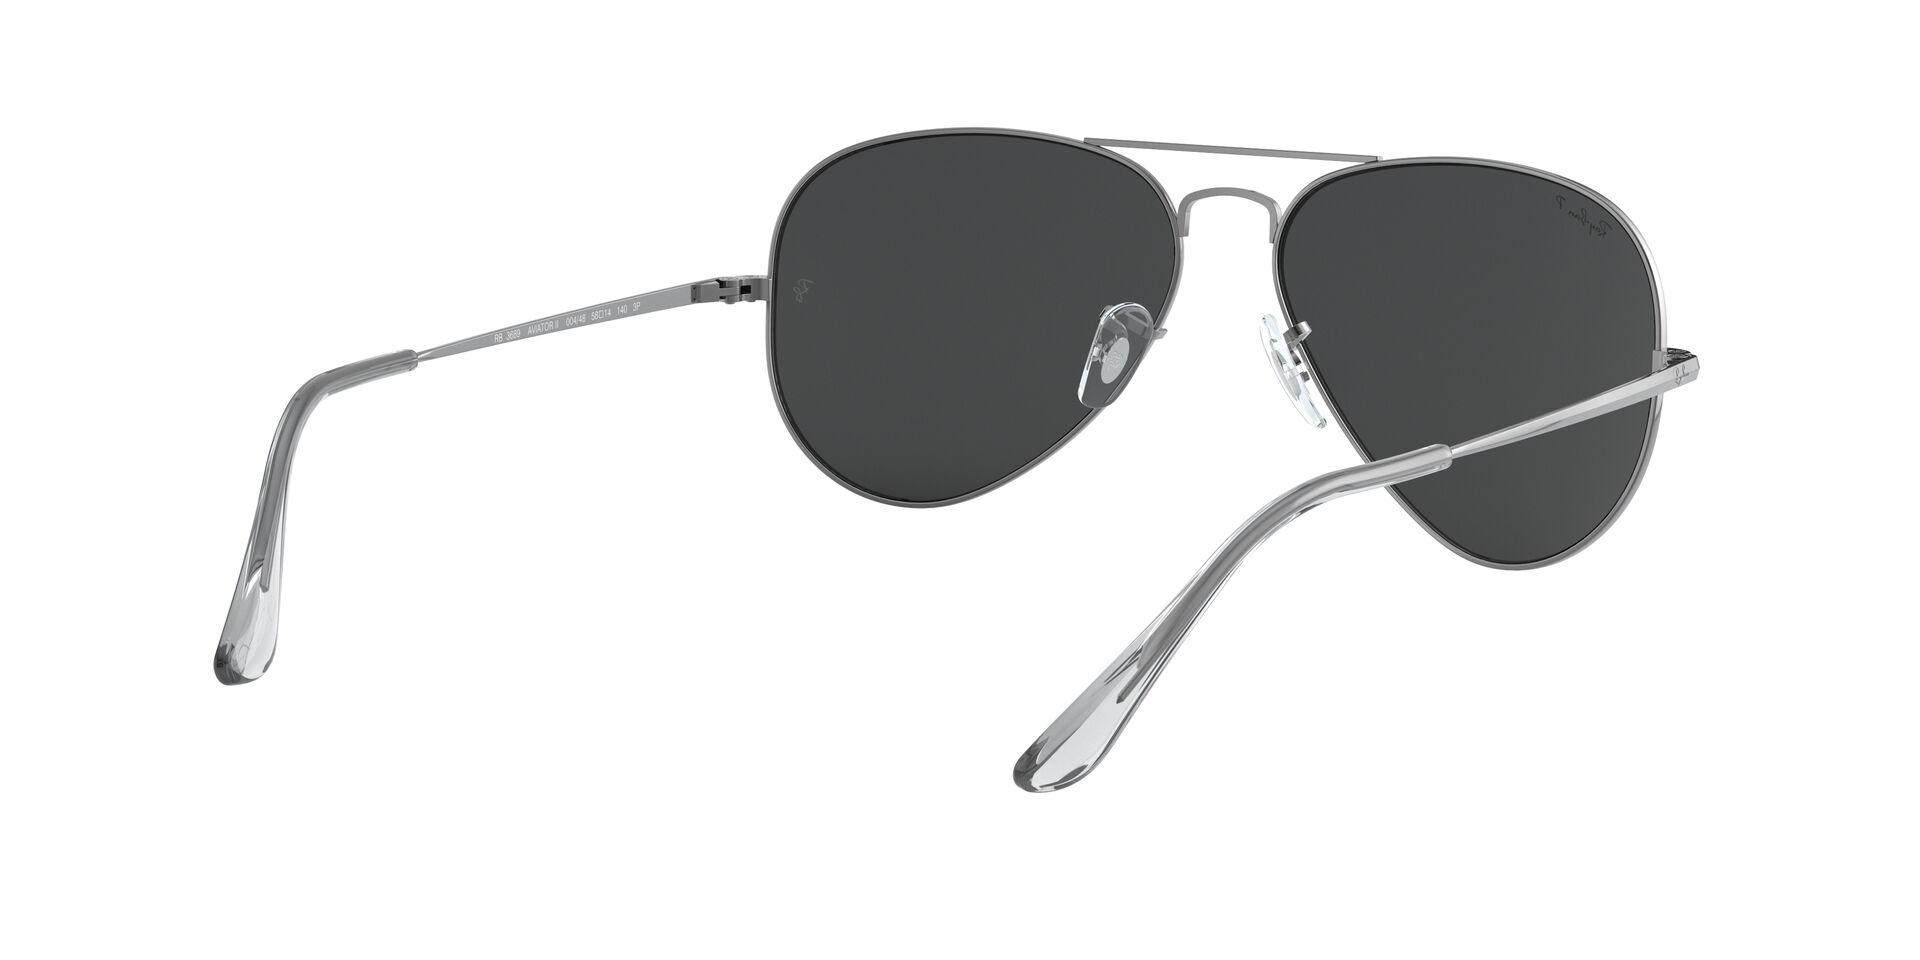 Mắt Kính RAY-BAN AVIATOR METAL II - RB3689 004/48 -Sunglasses